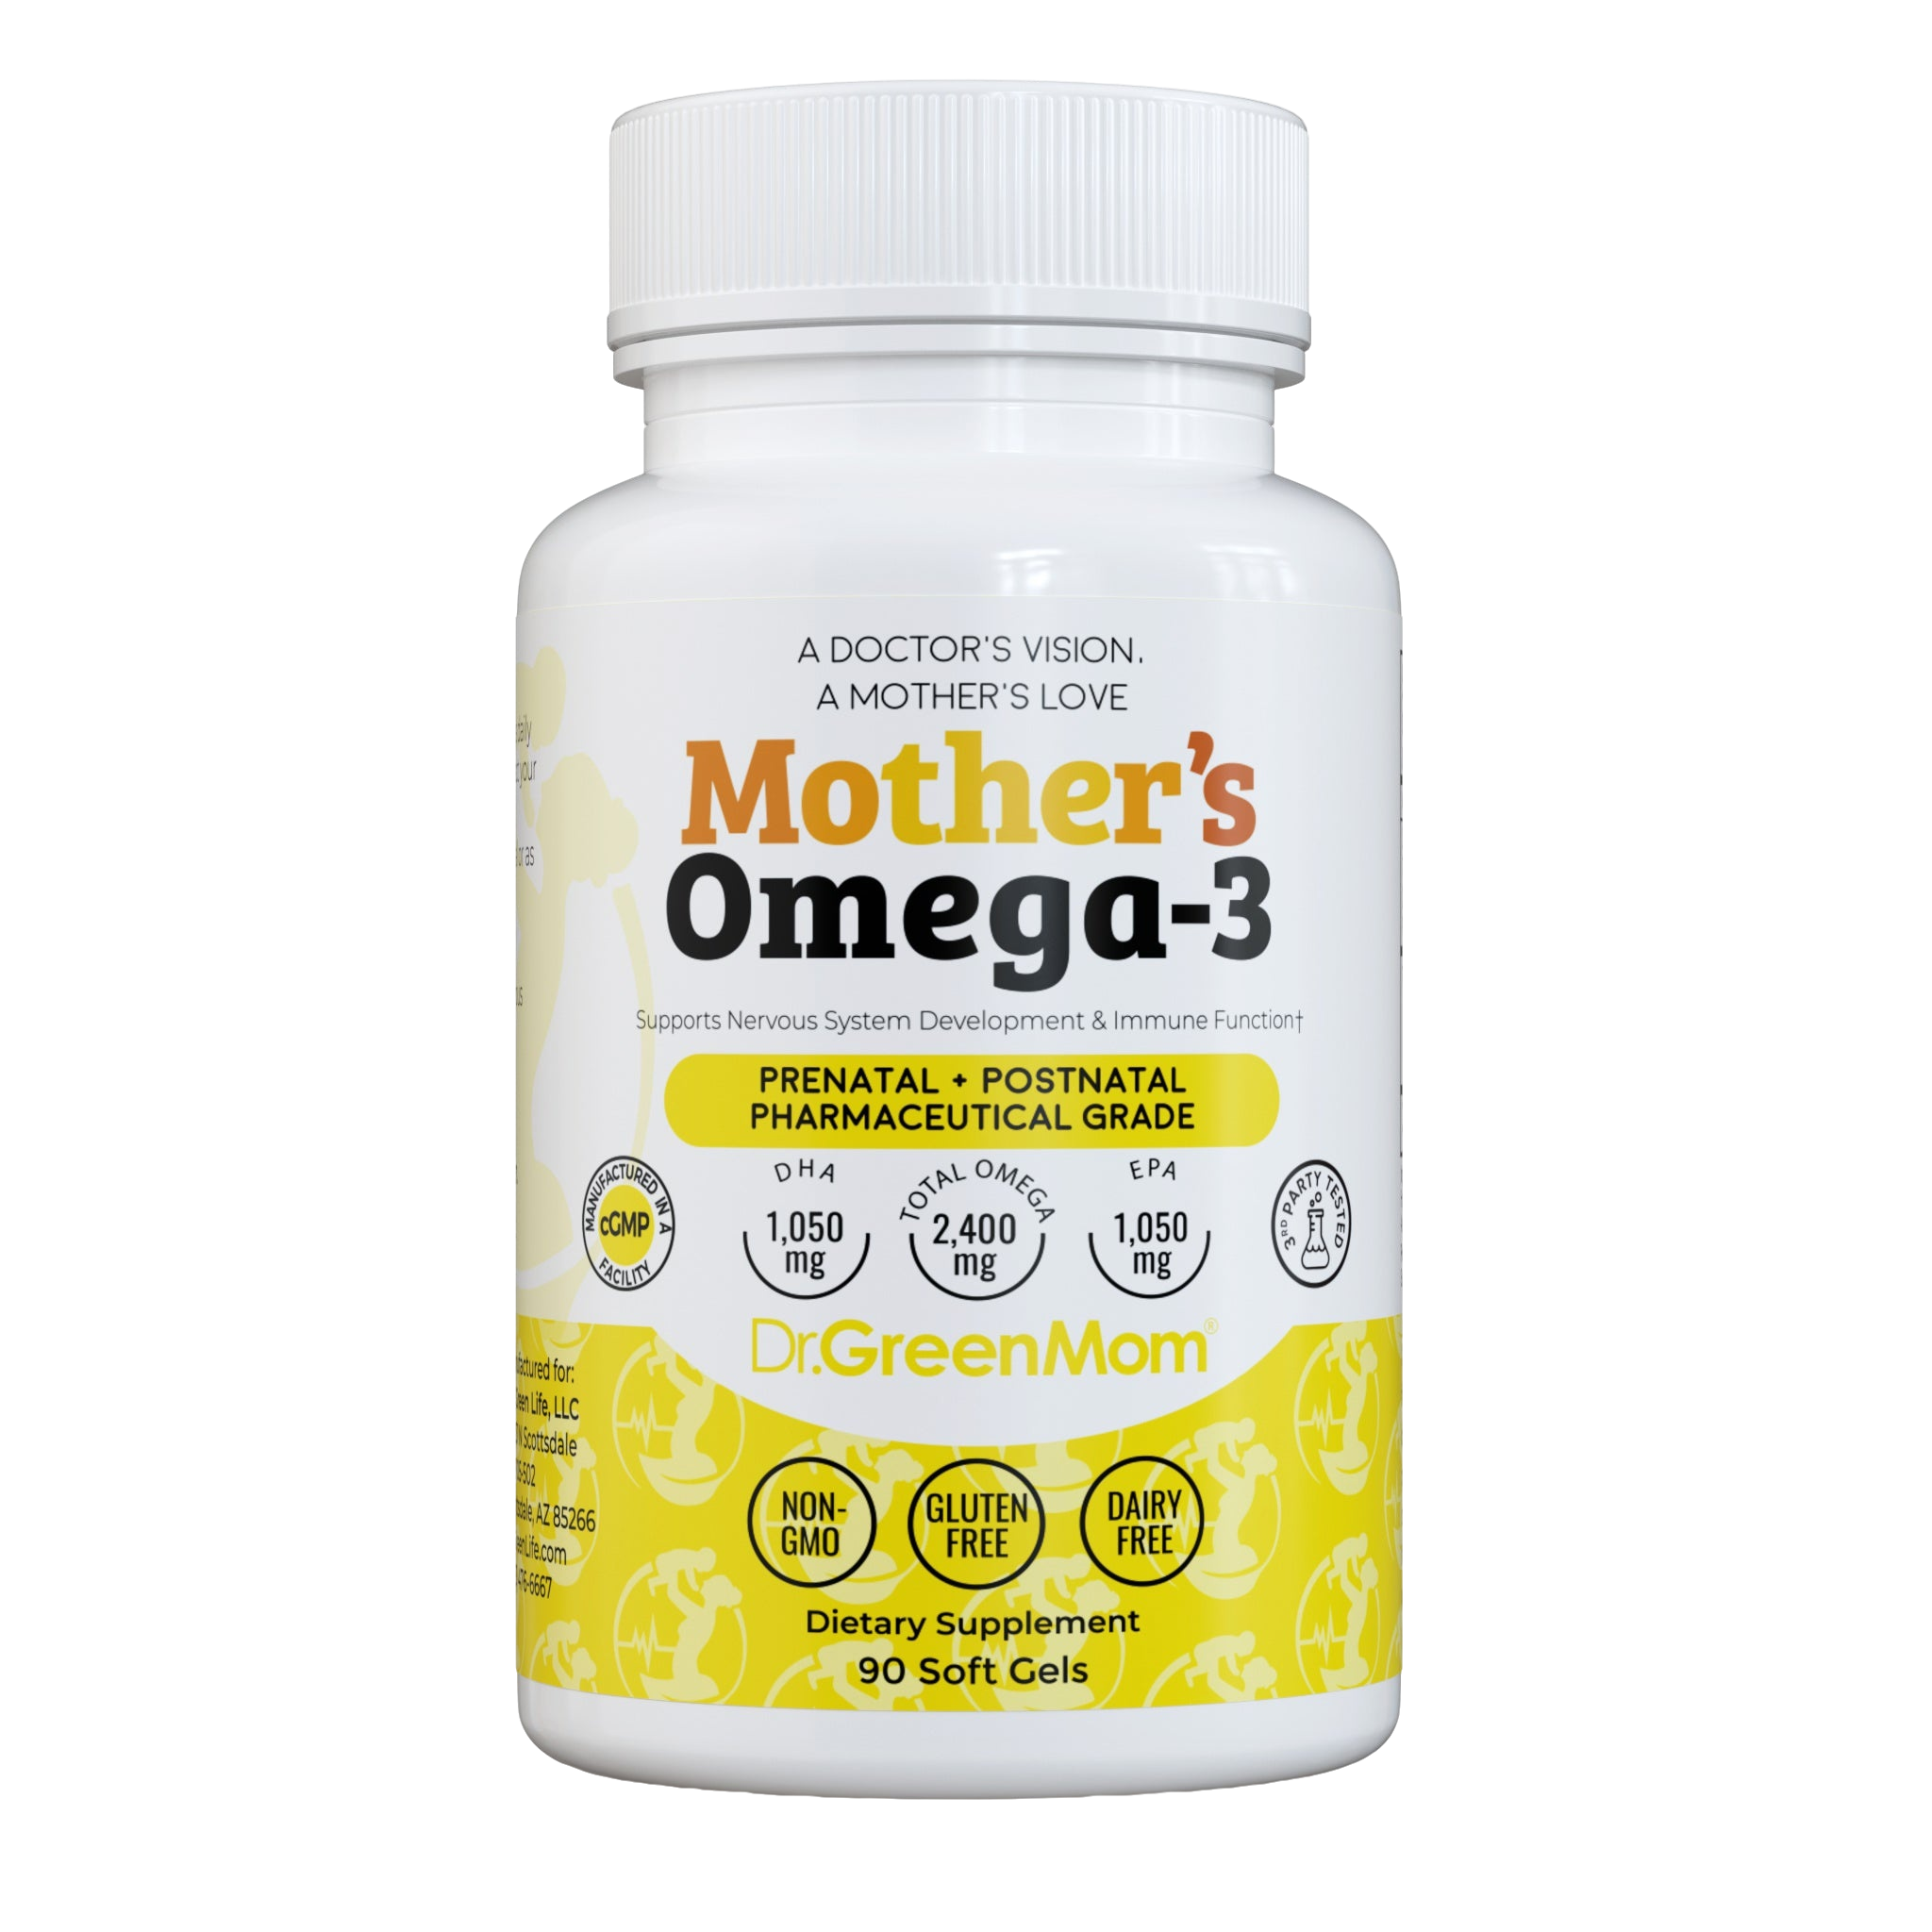 Bundle product Mother's Omega-3 Pharmaceutical Grade